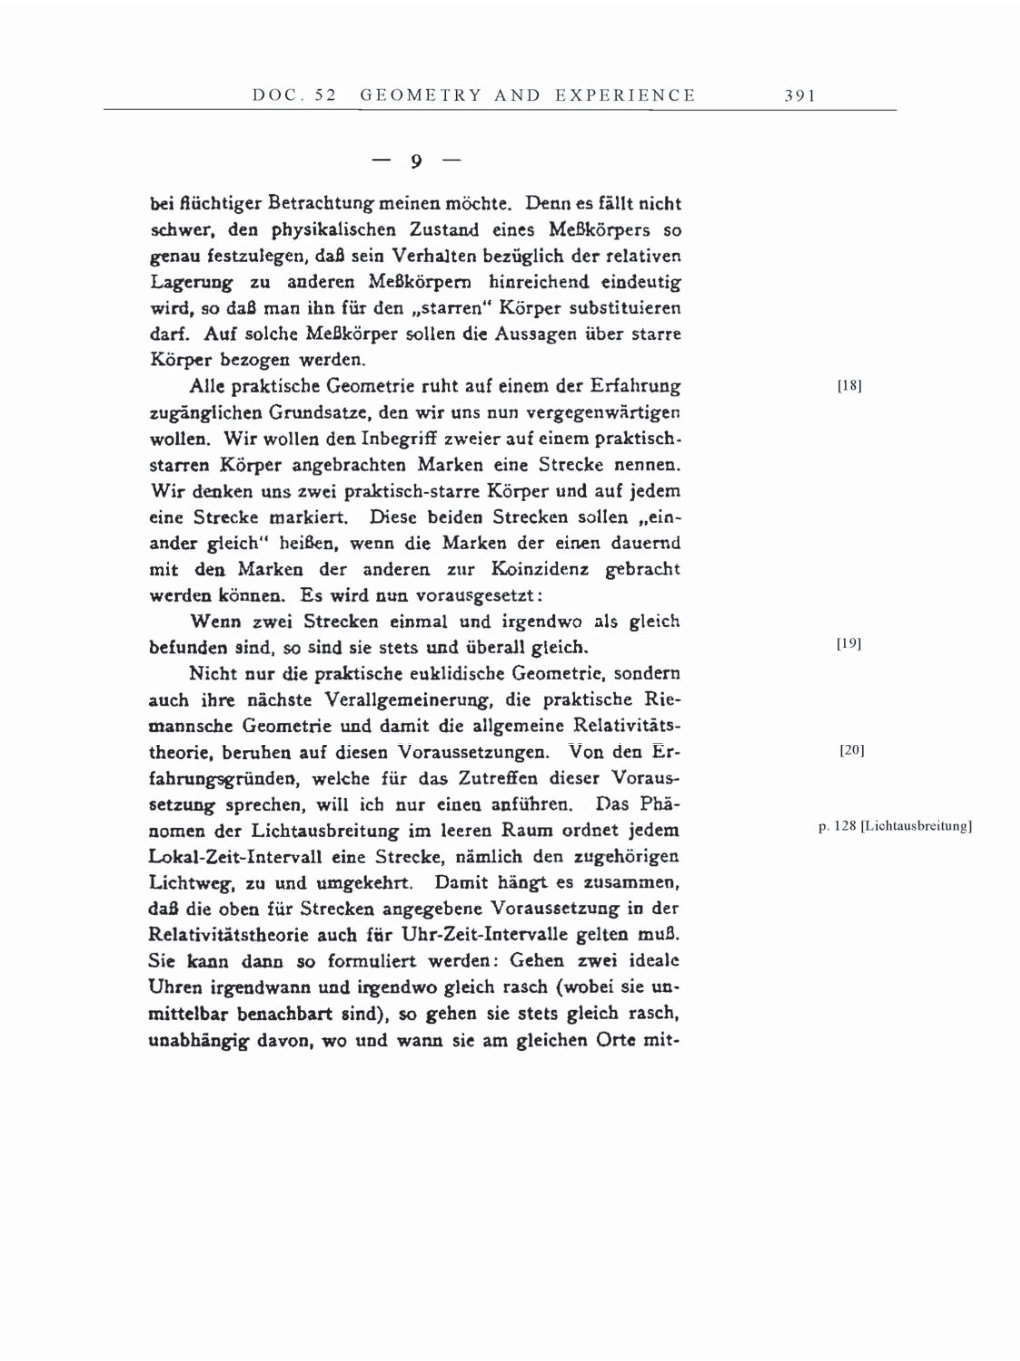 Volume 7: The Berlin Years: Writings, 1918-1921 page 391